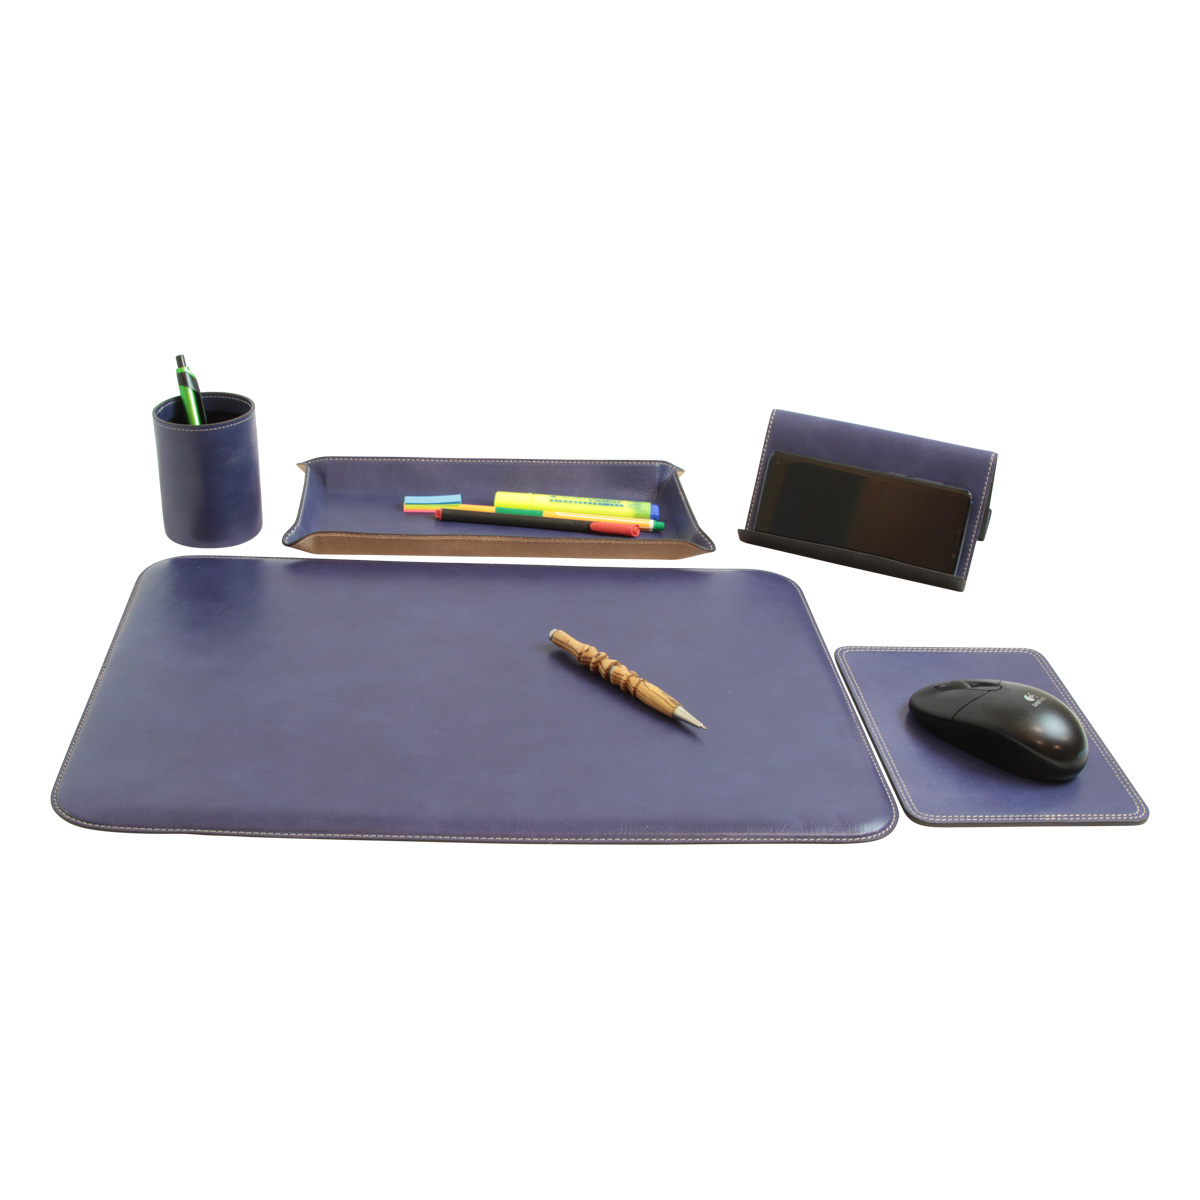 Leather desk kit - 5 pcs |769089CB|Old Angler Firenze